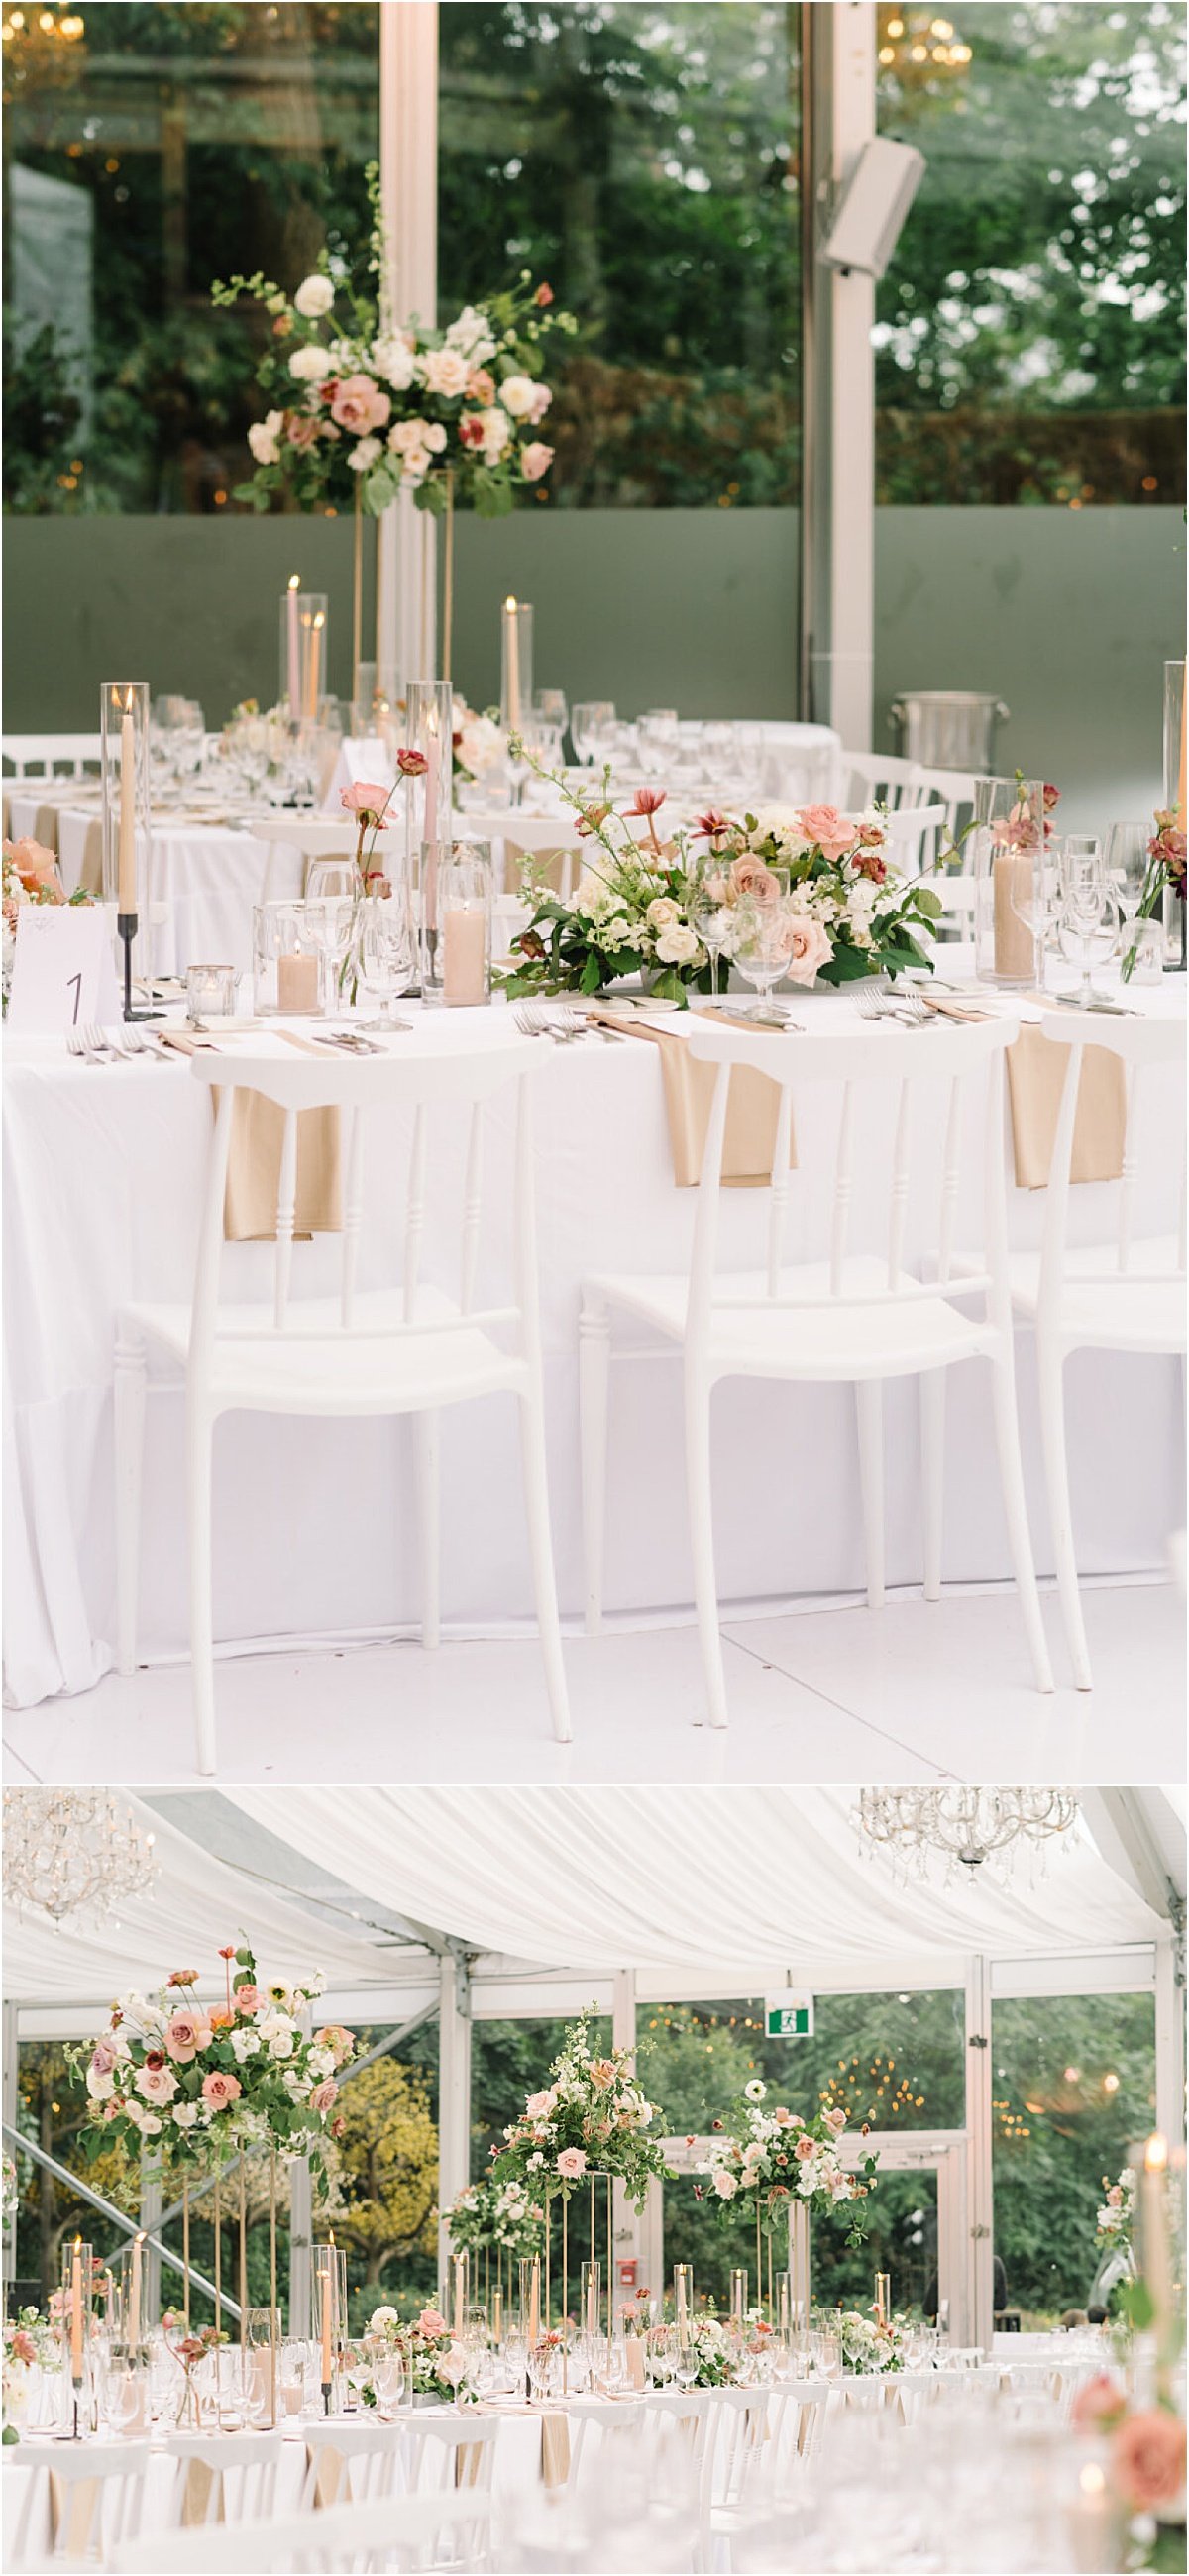 Casa-Loma-Glass-Pavilion-Wedding-Toronto-Planner-Laura-Olsen-Events-25.jpg